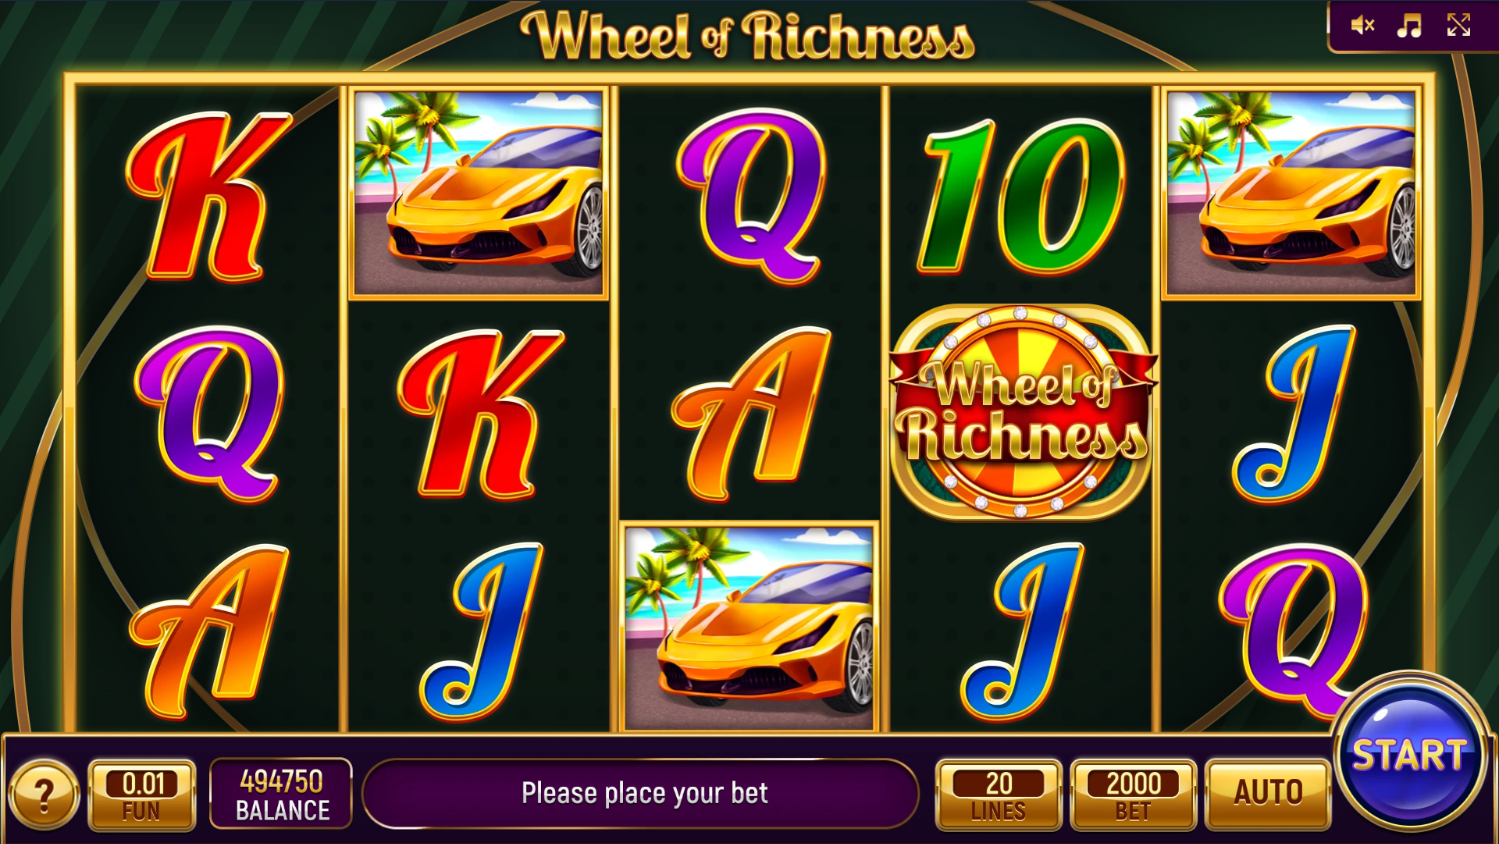 Wheel of Richness